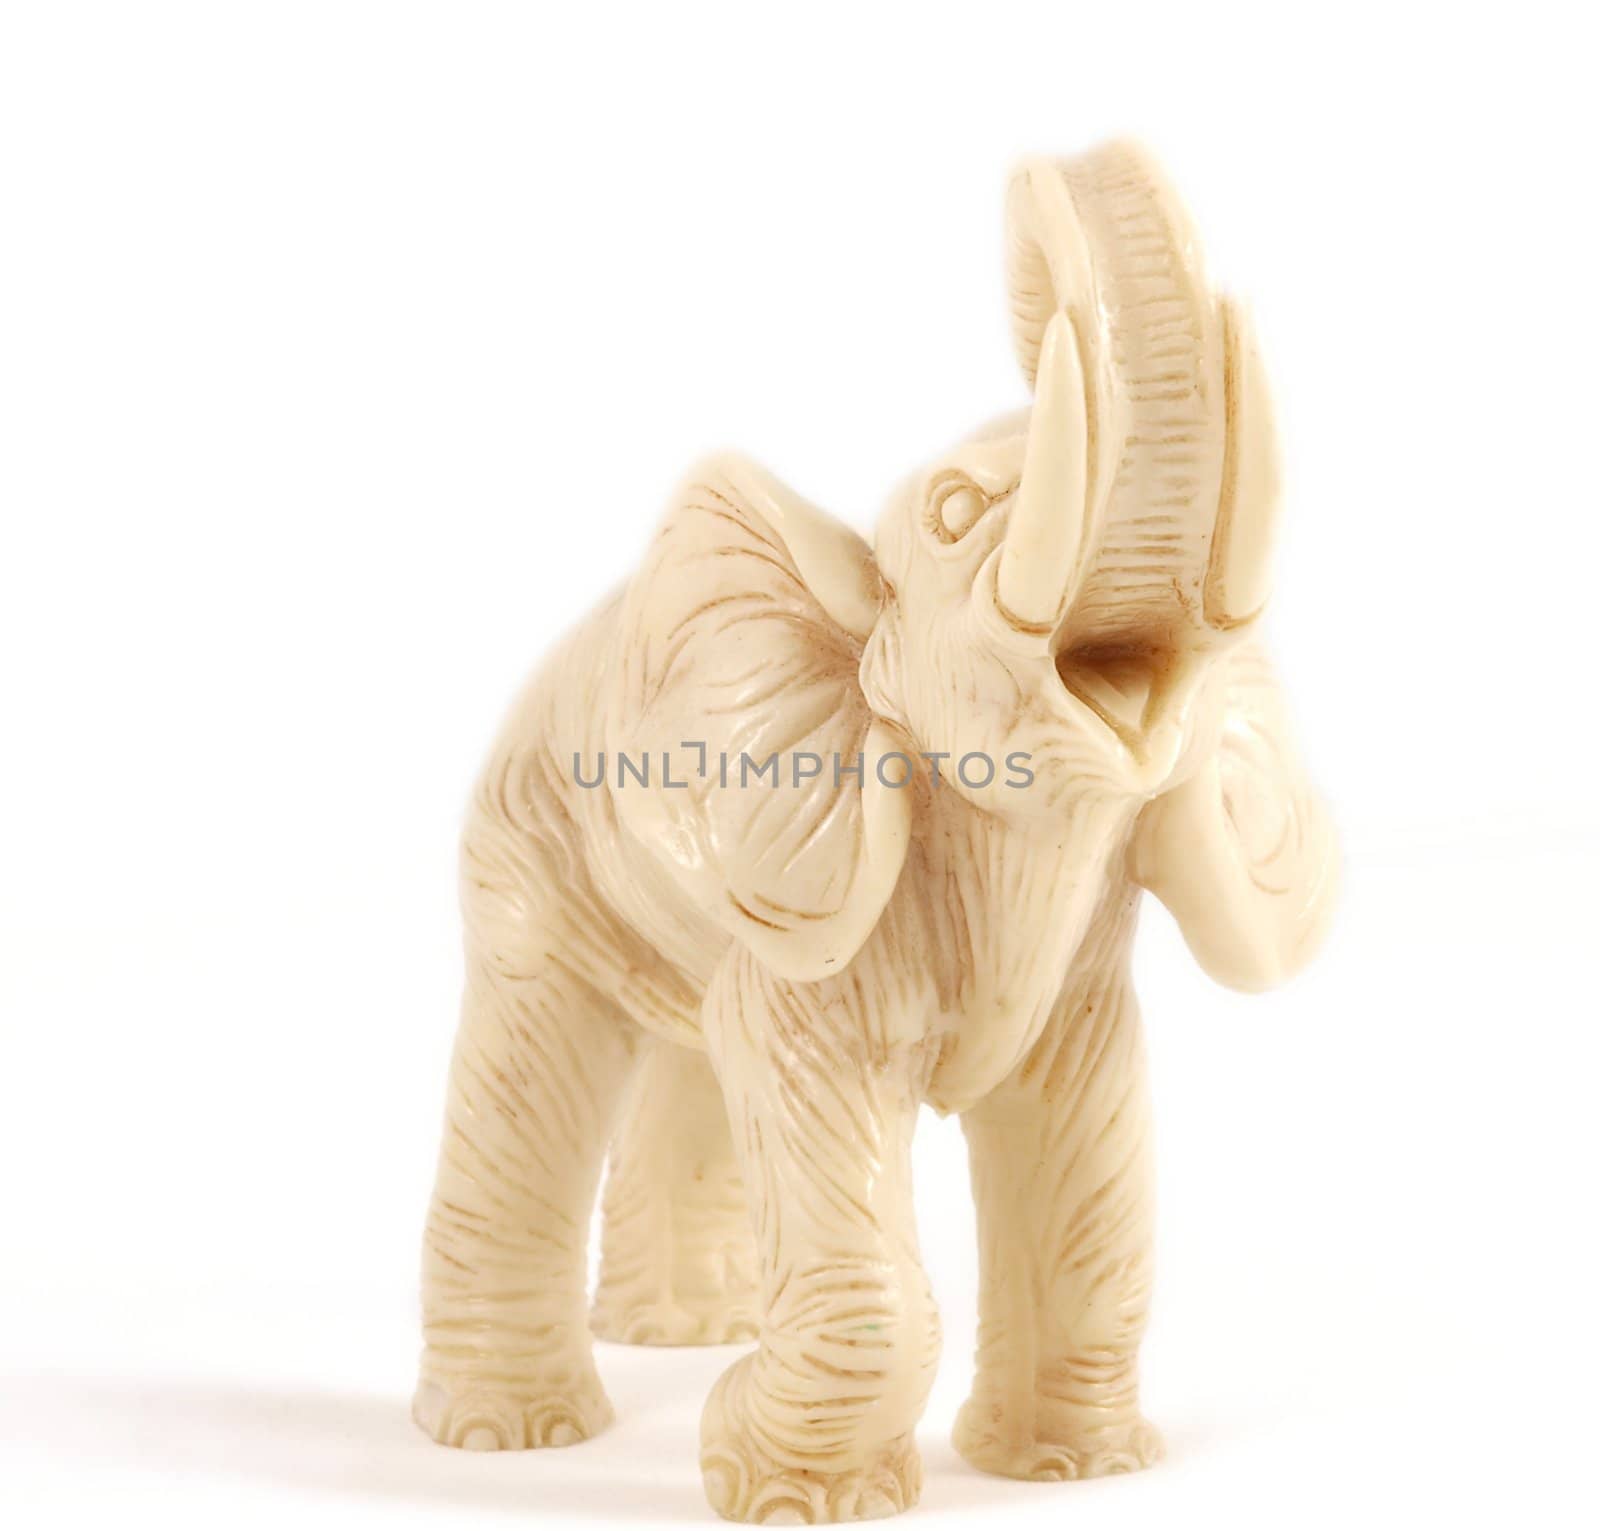 Small elephant model by Arvebettum